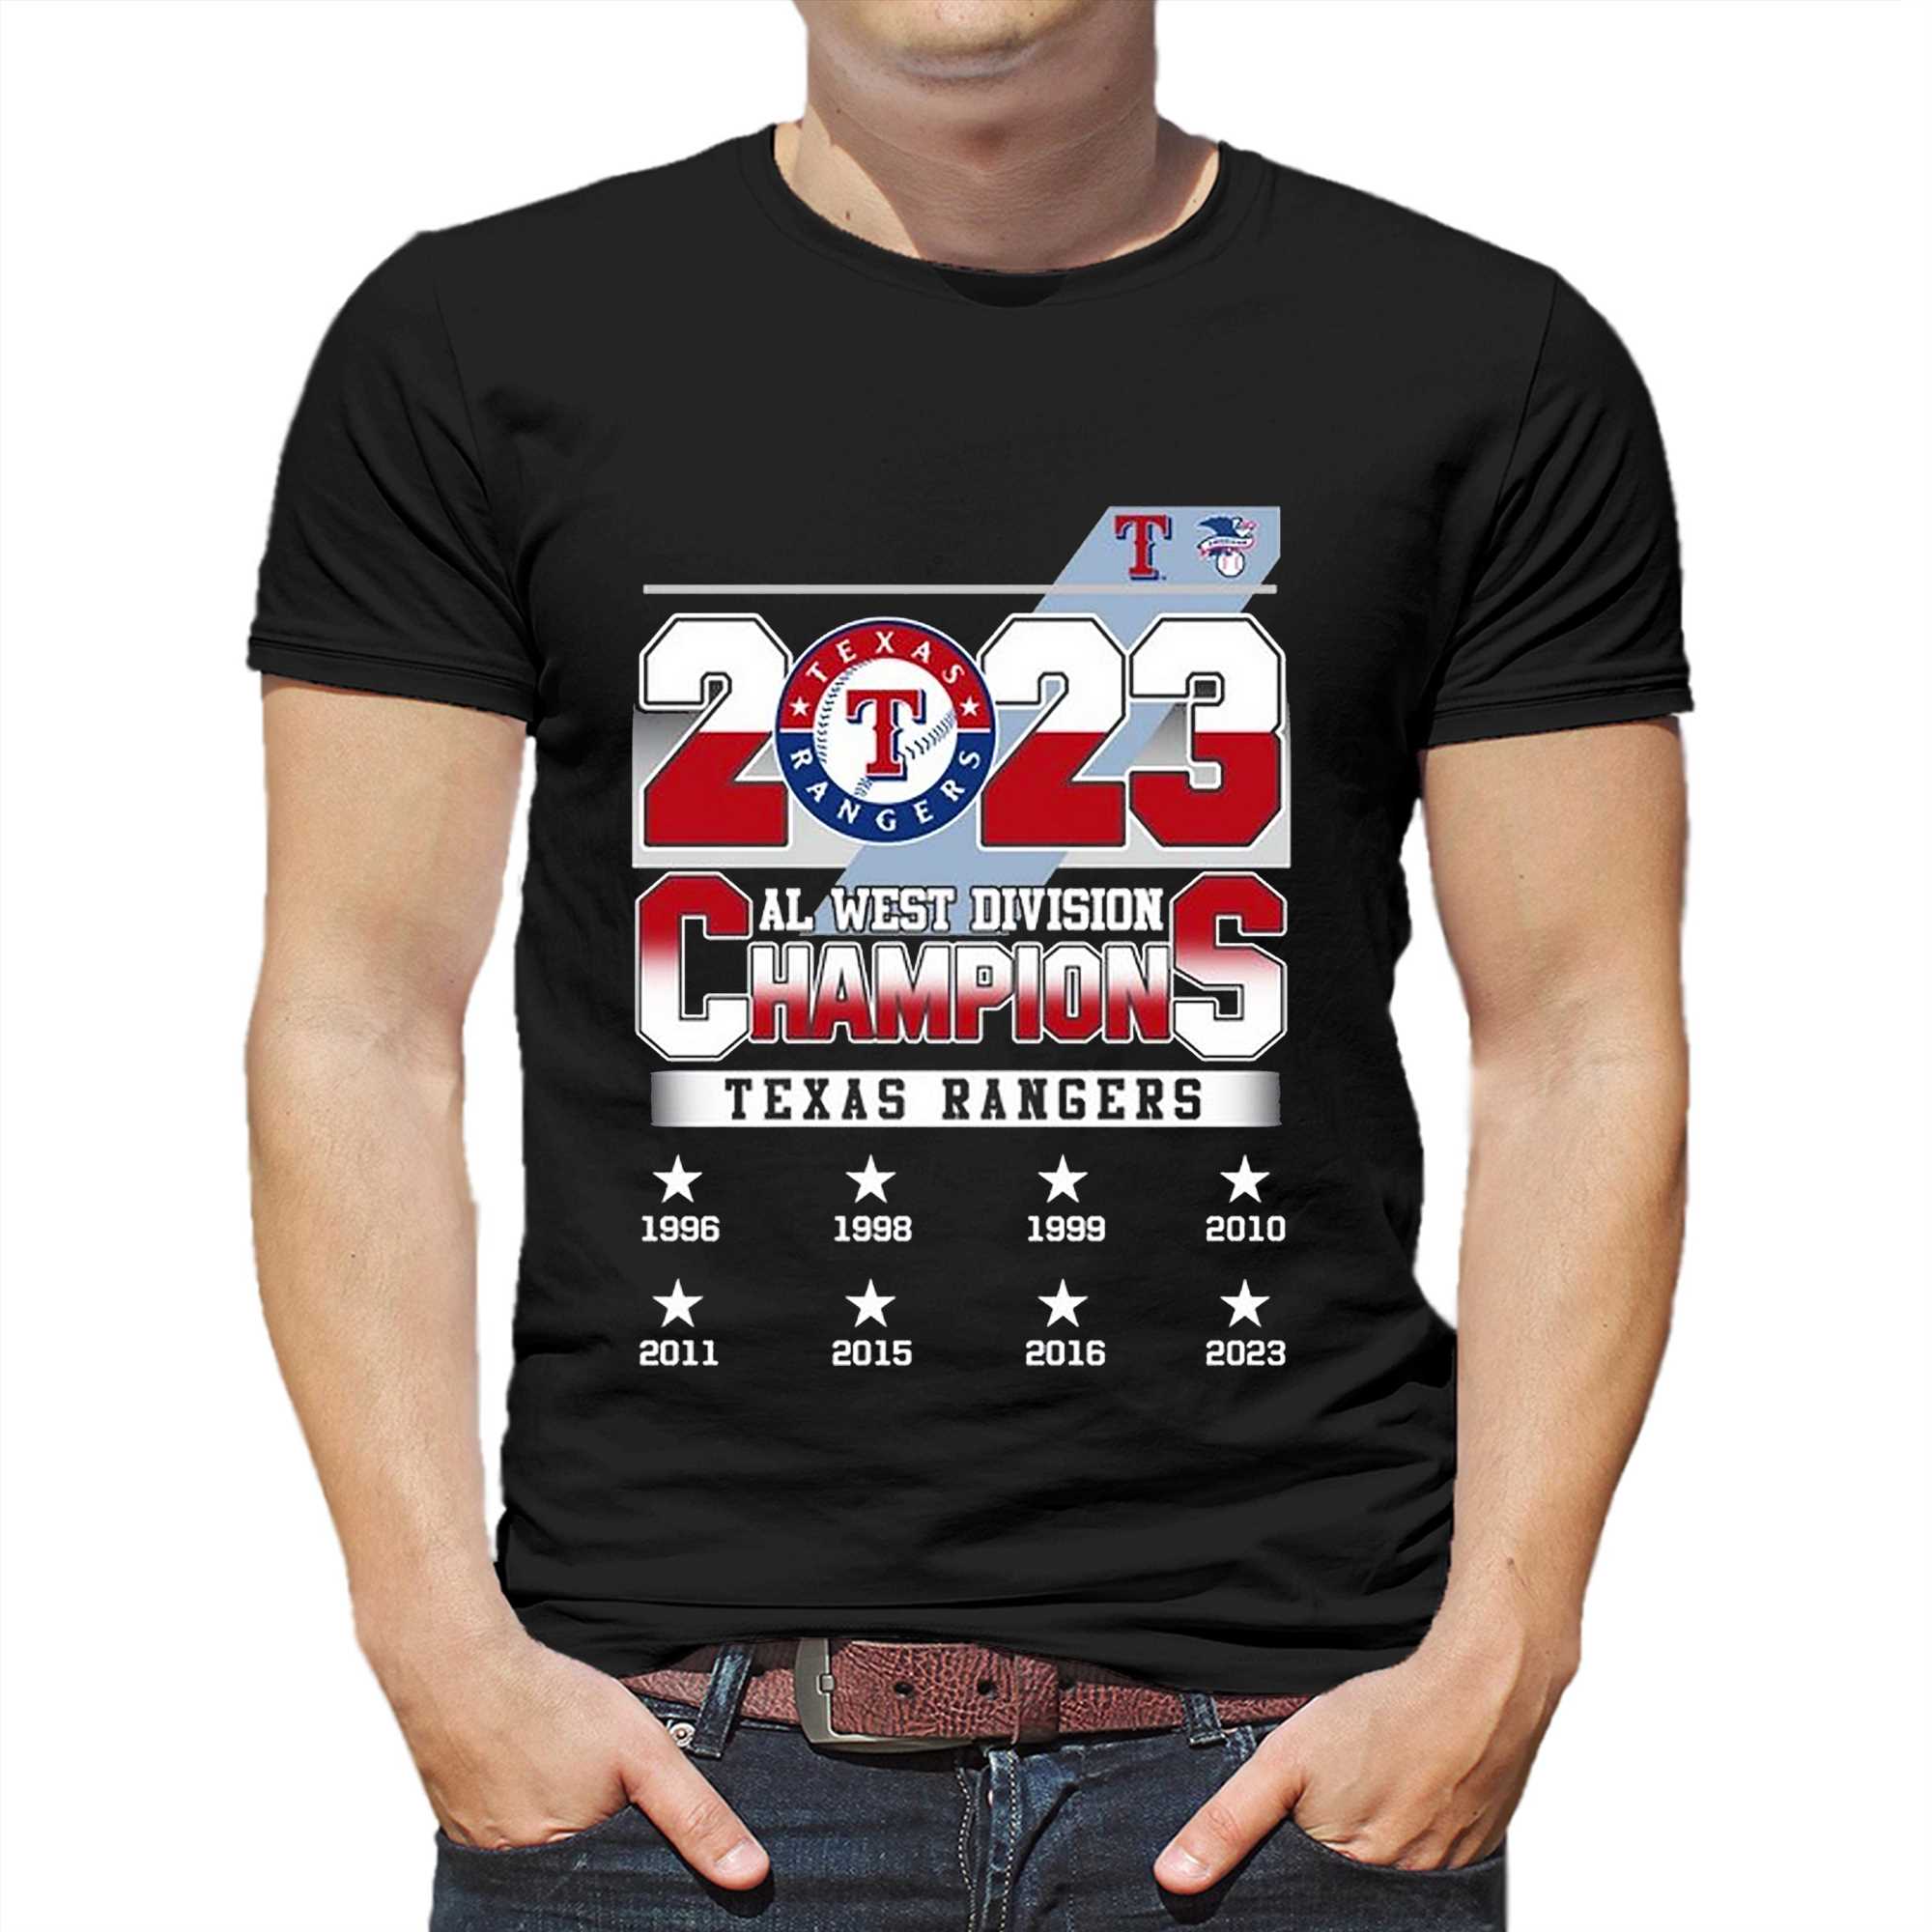 Official Kids Texas Rangers Gear, Youth Rangers Apparel, Merchandise